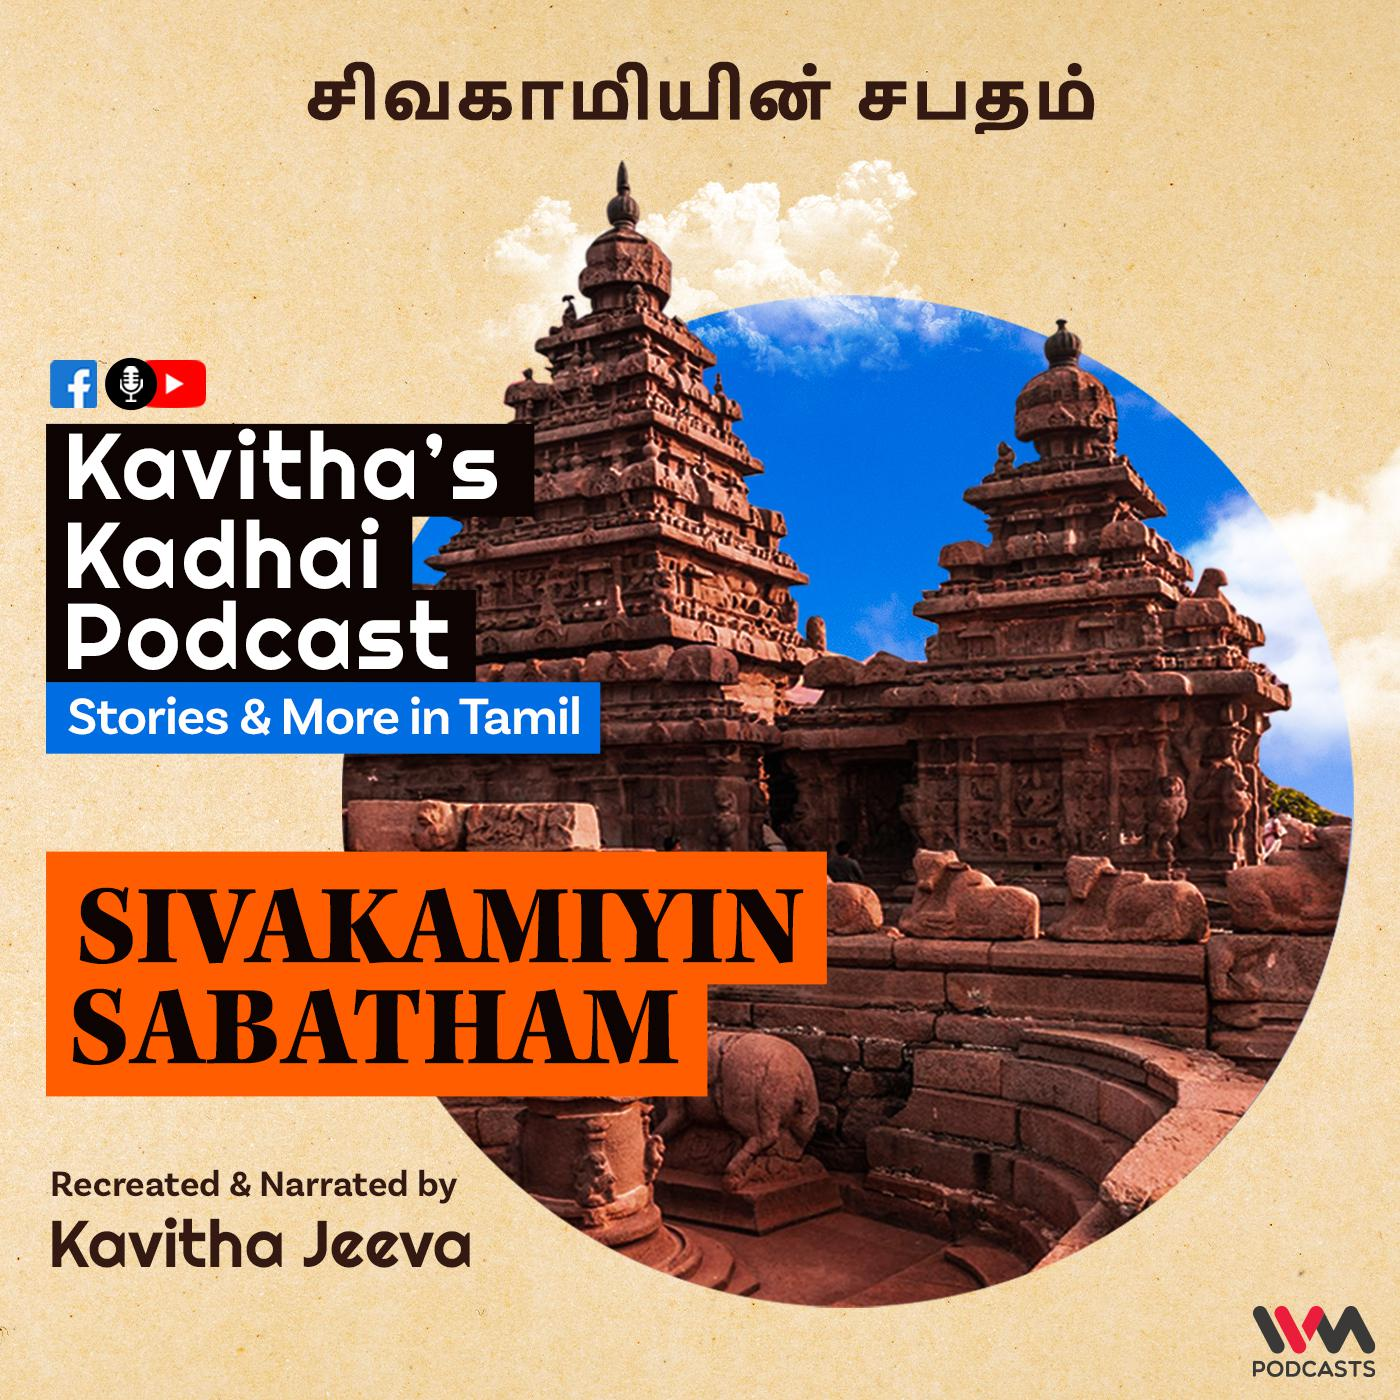 KadhaiPodcast's Sivakamiyin Sabatham with Kavitha Jeeva - Episode #112